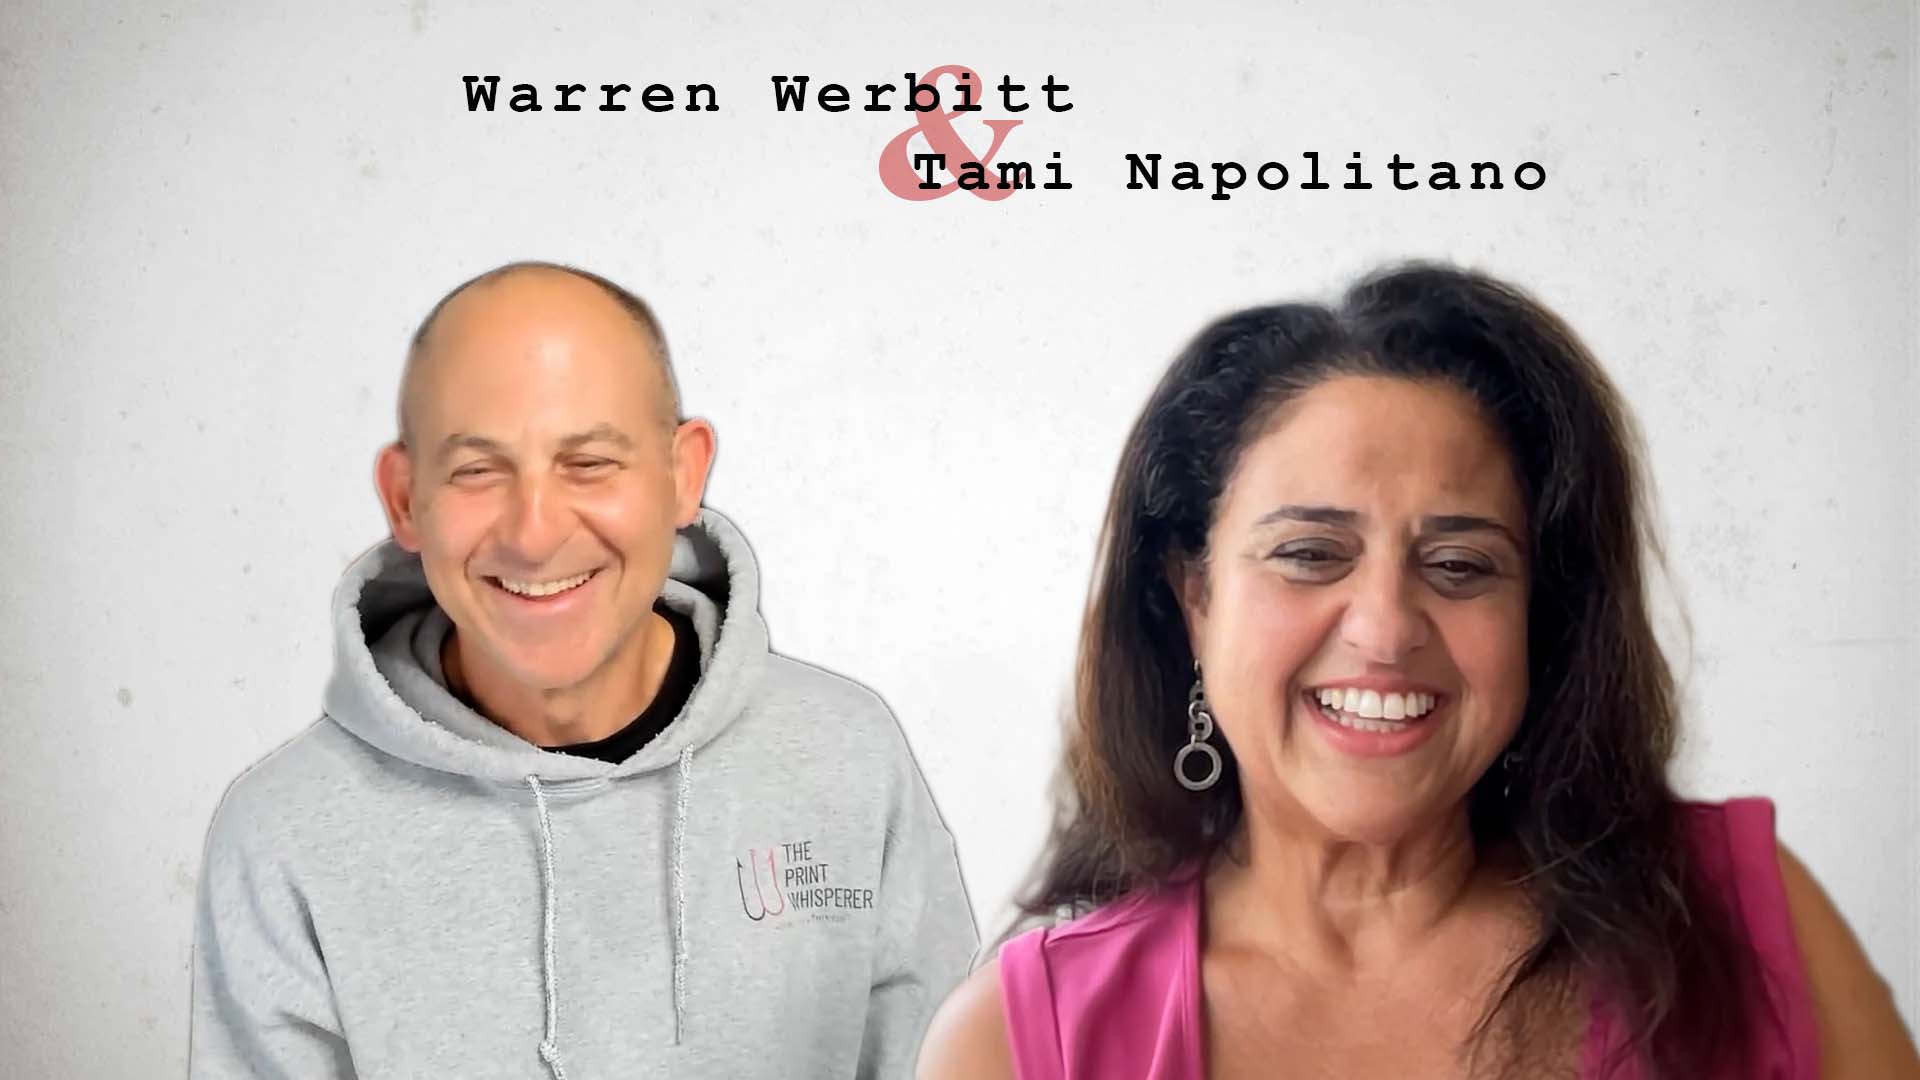 Warren Werbitt Goes Printer to Printer with Awesome Graphics’ Tami Napolitano